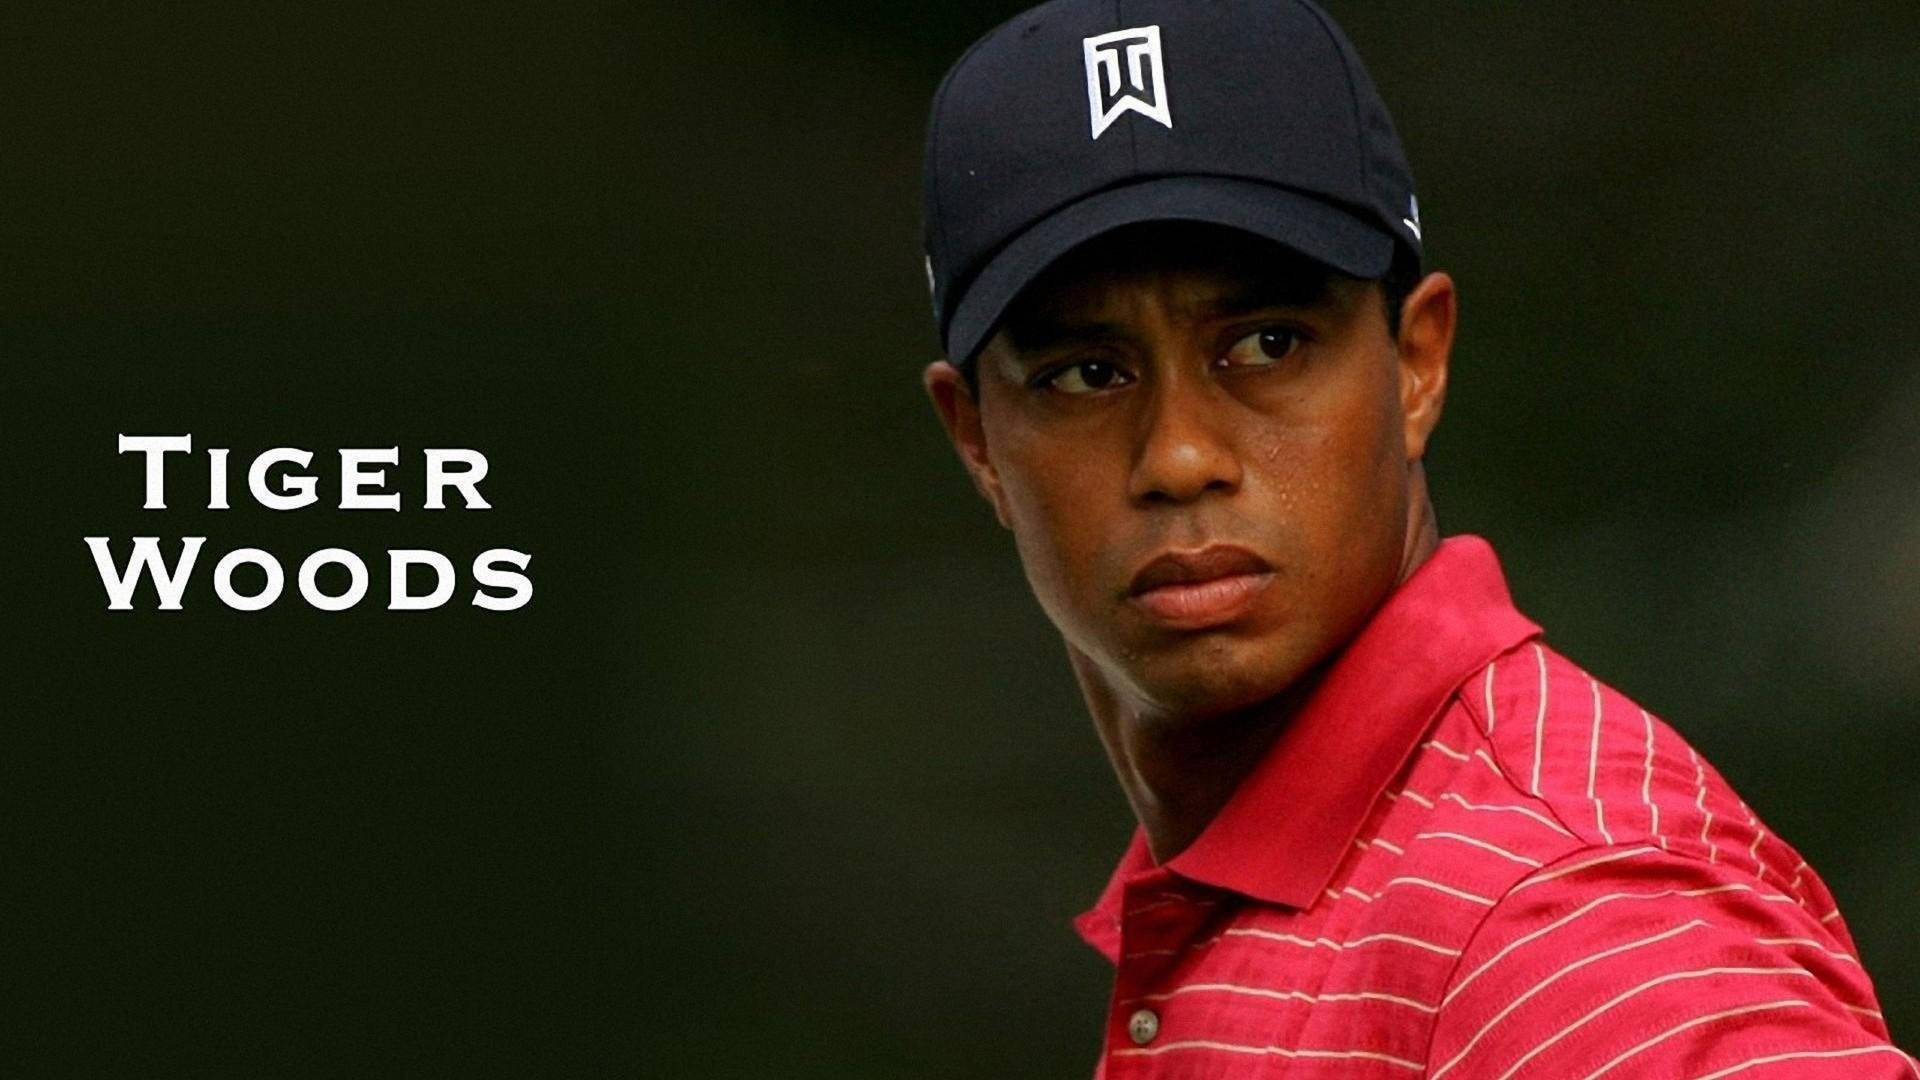 Tiger Woods Portrait Wallpaper